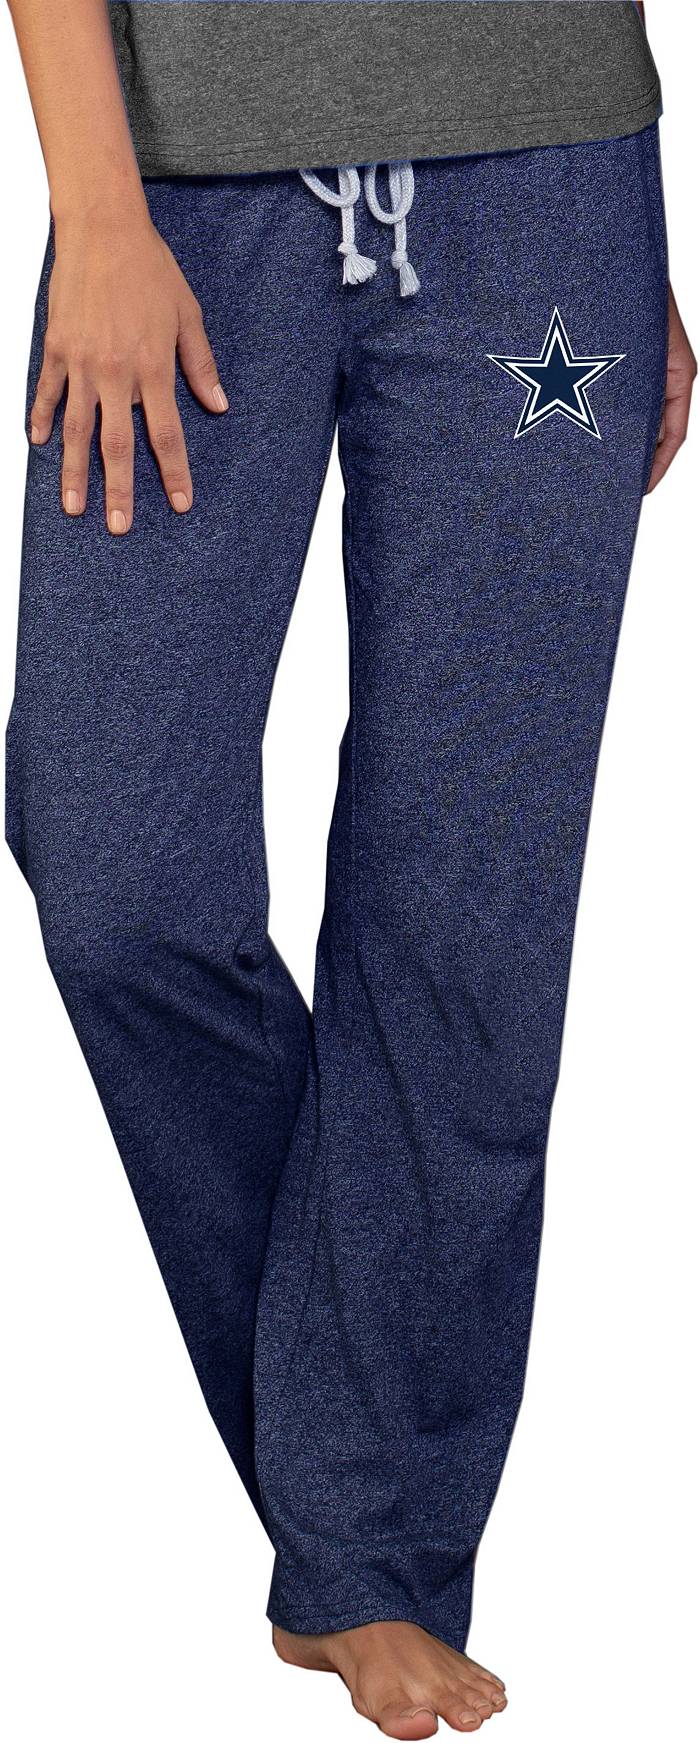 47 Dallas Cowboys TRAILSIDE Bottoms Fashion Sweatpants - Navy Blue